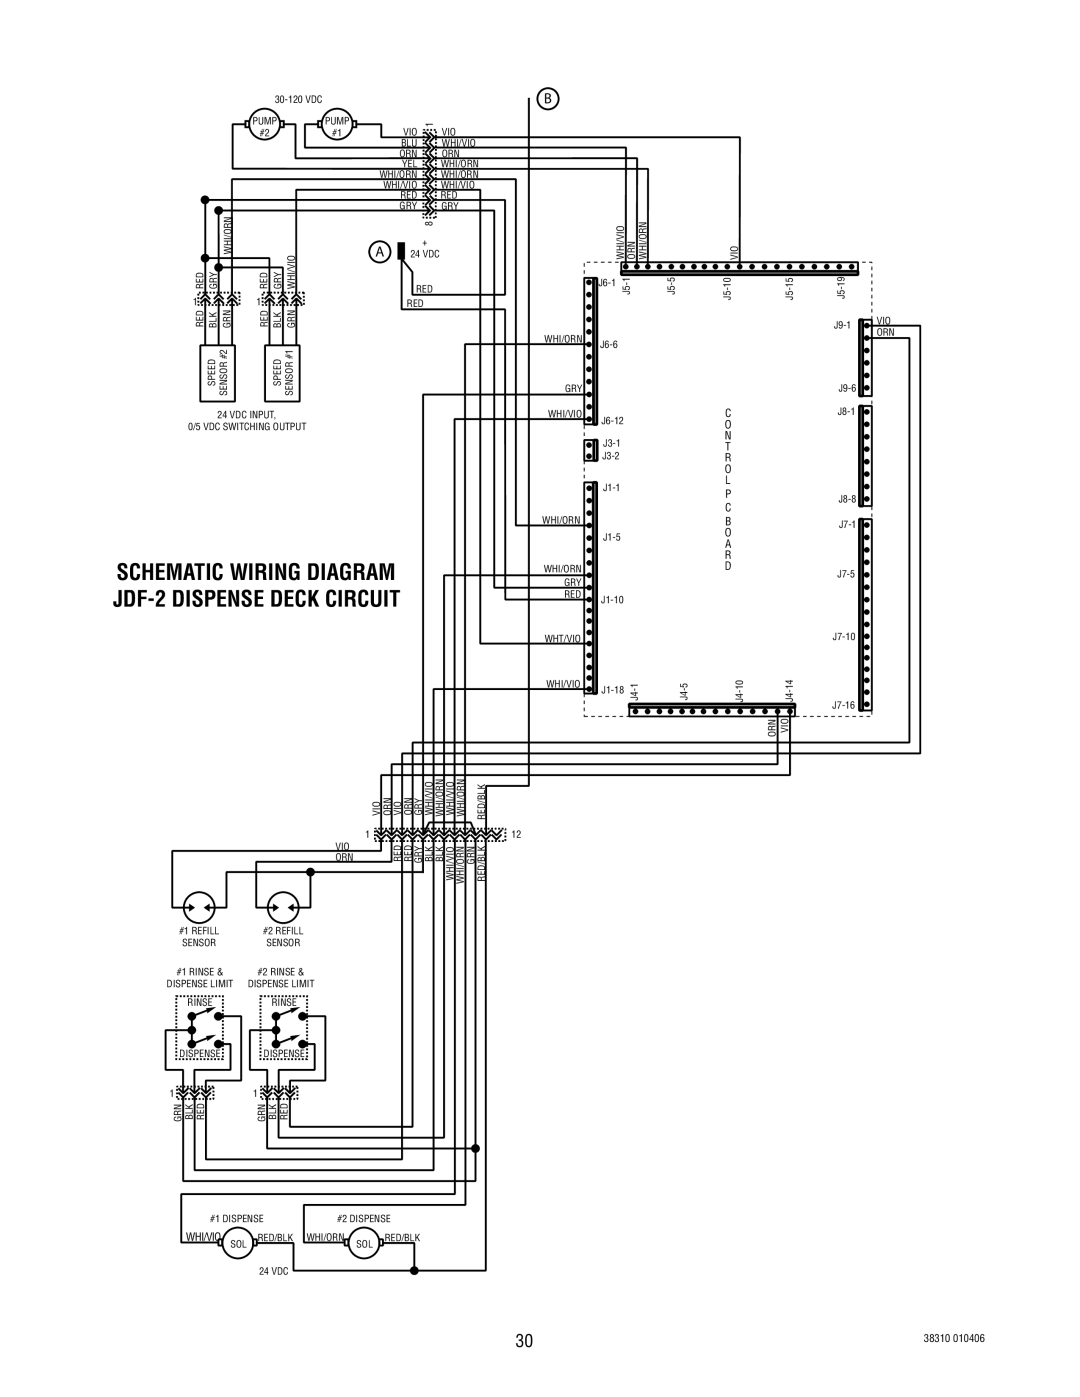 Bunn manual Schematic Wiring Diagram, JDF-2DISPENSE DECK CIRCUIT 